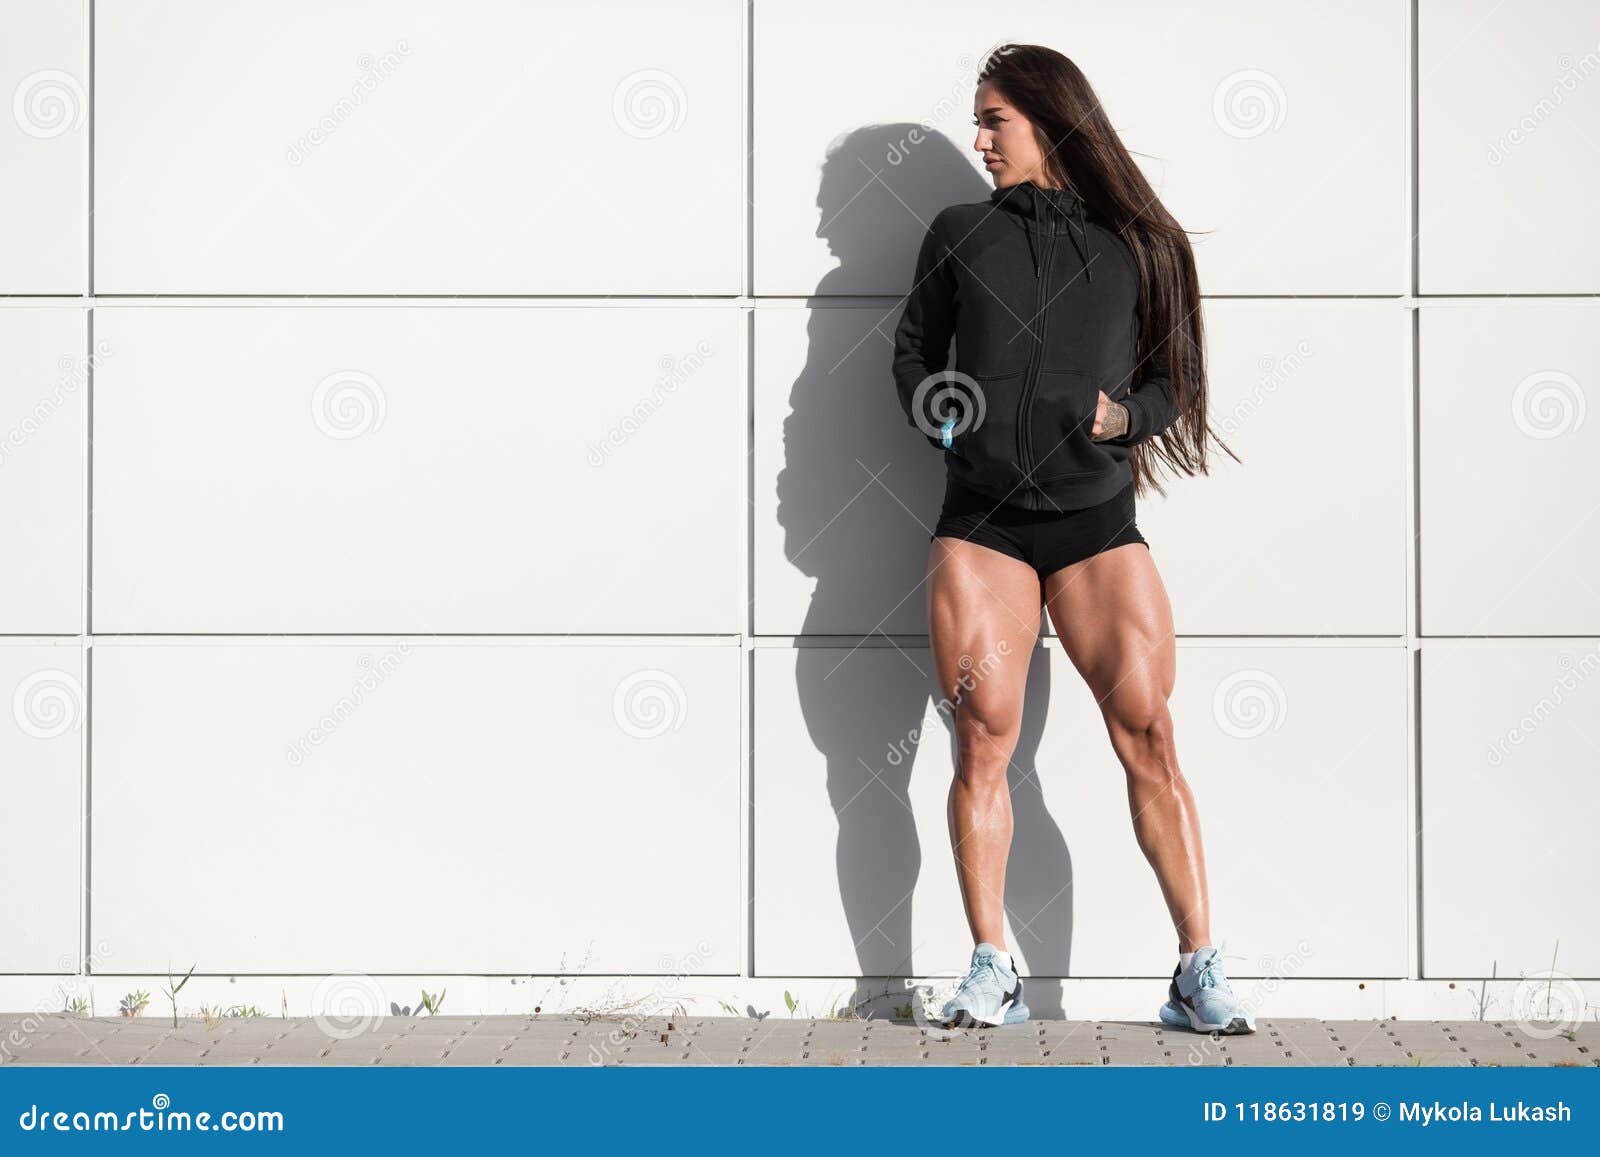 Legs muscular female Top 15